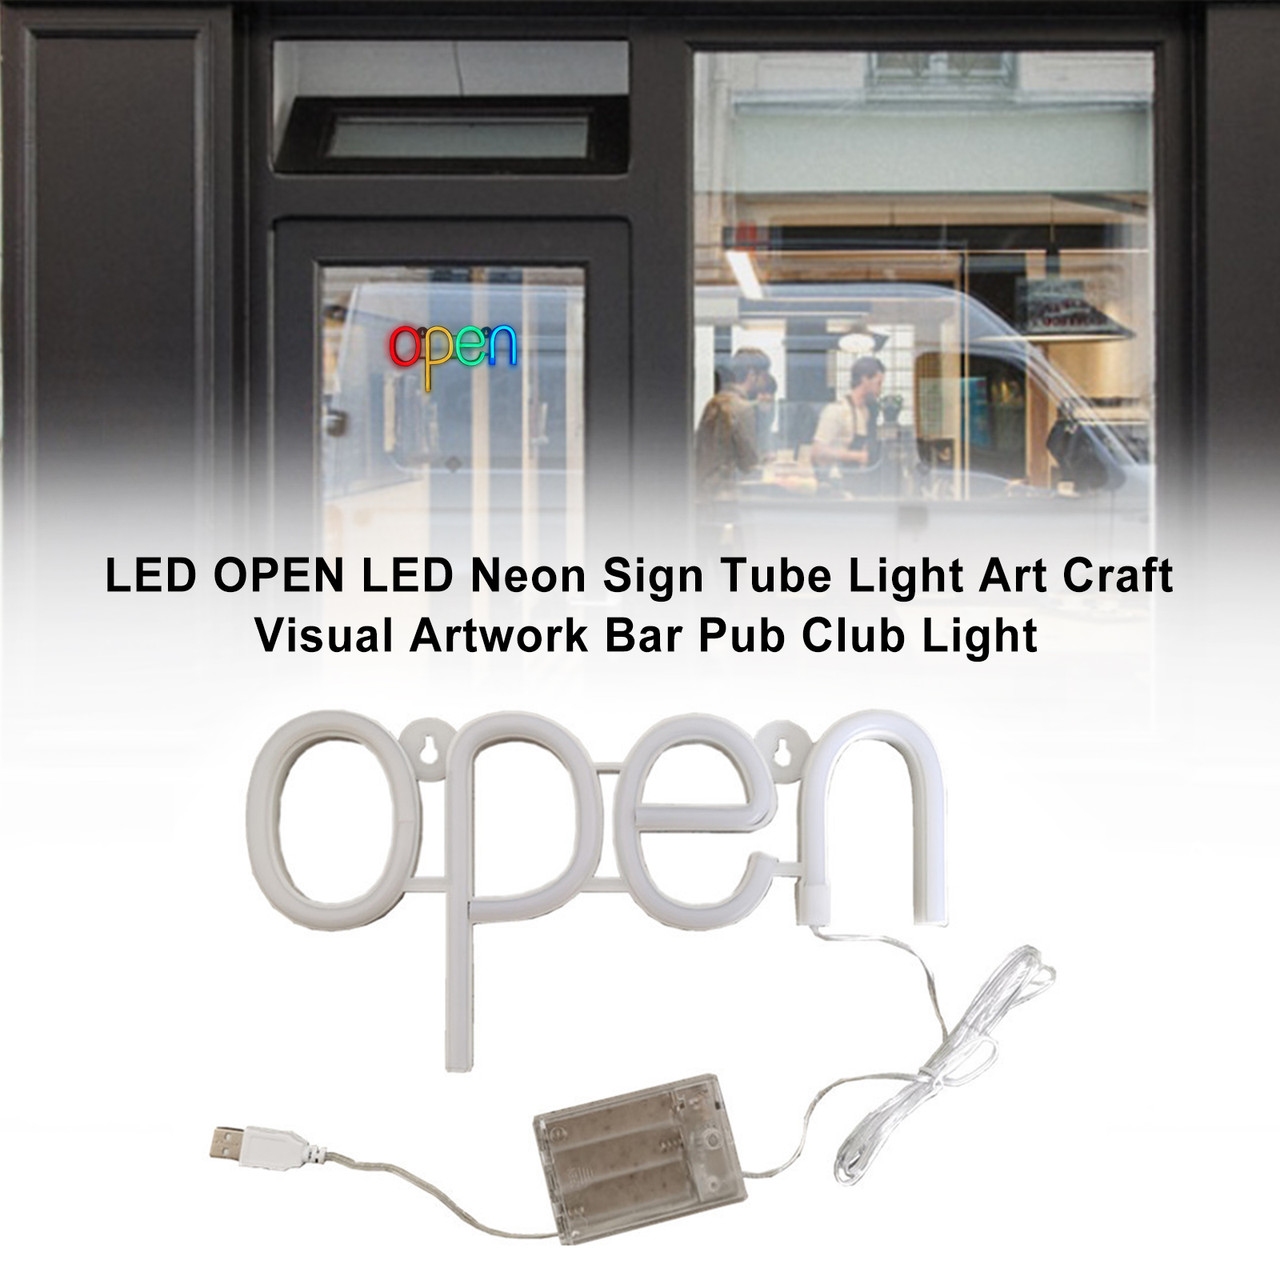 LED OPEN LED Neon Sign Tube Light Art Craft Visual Artwork Bar Pub Club Light